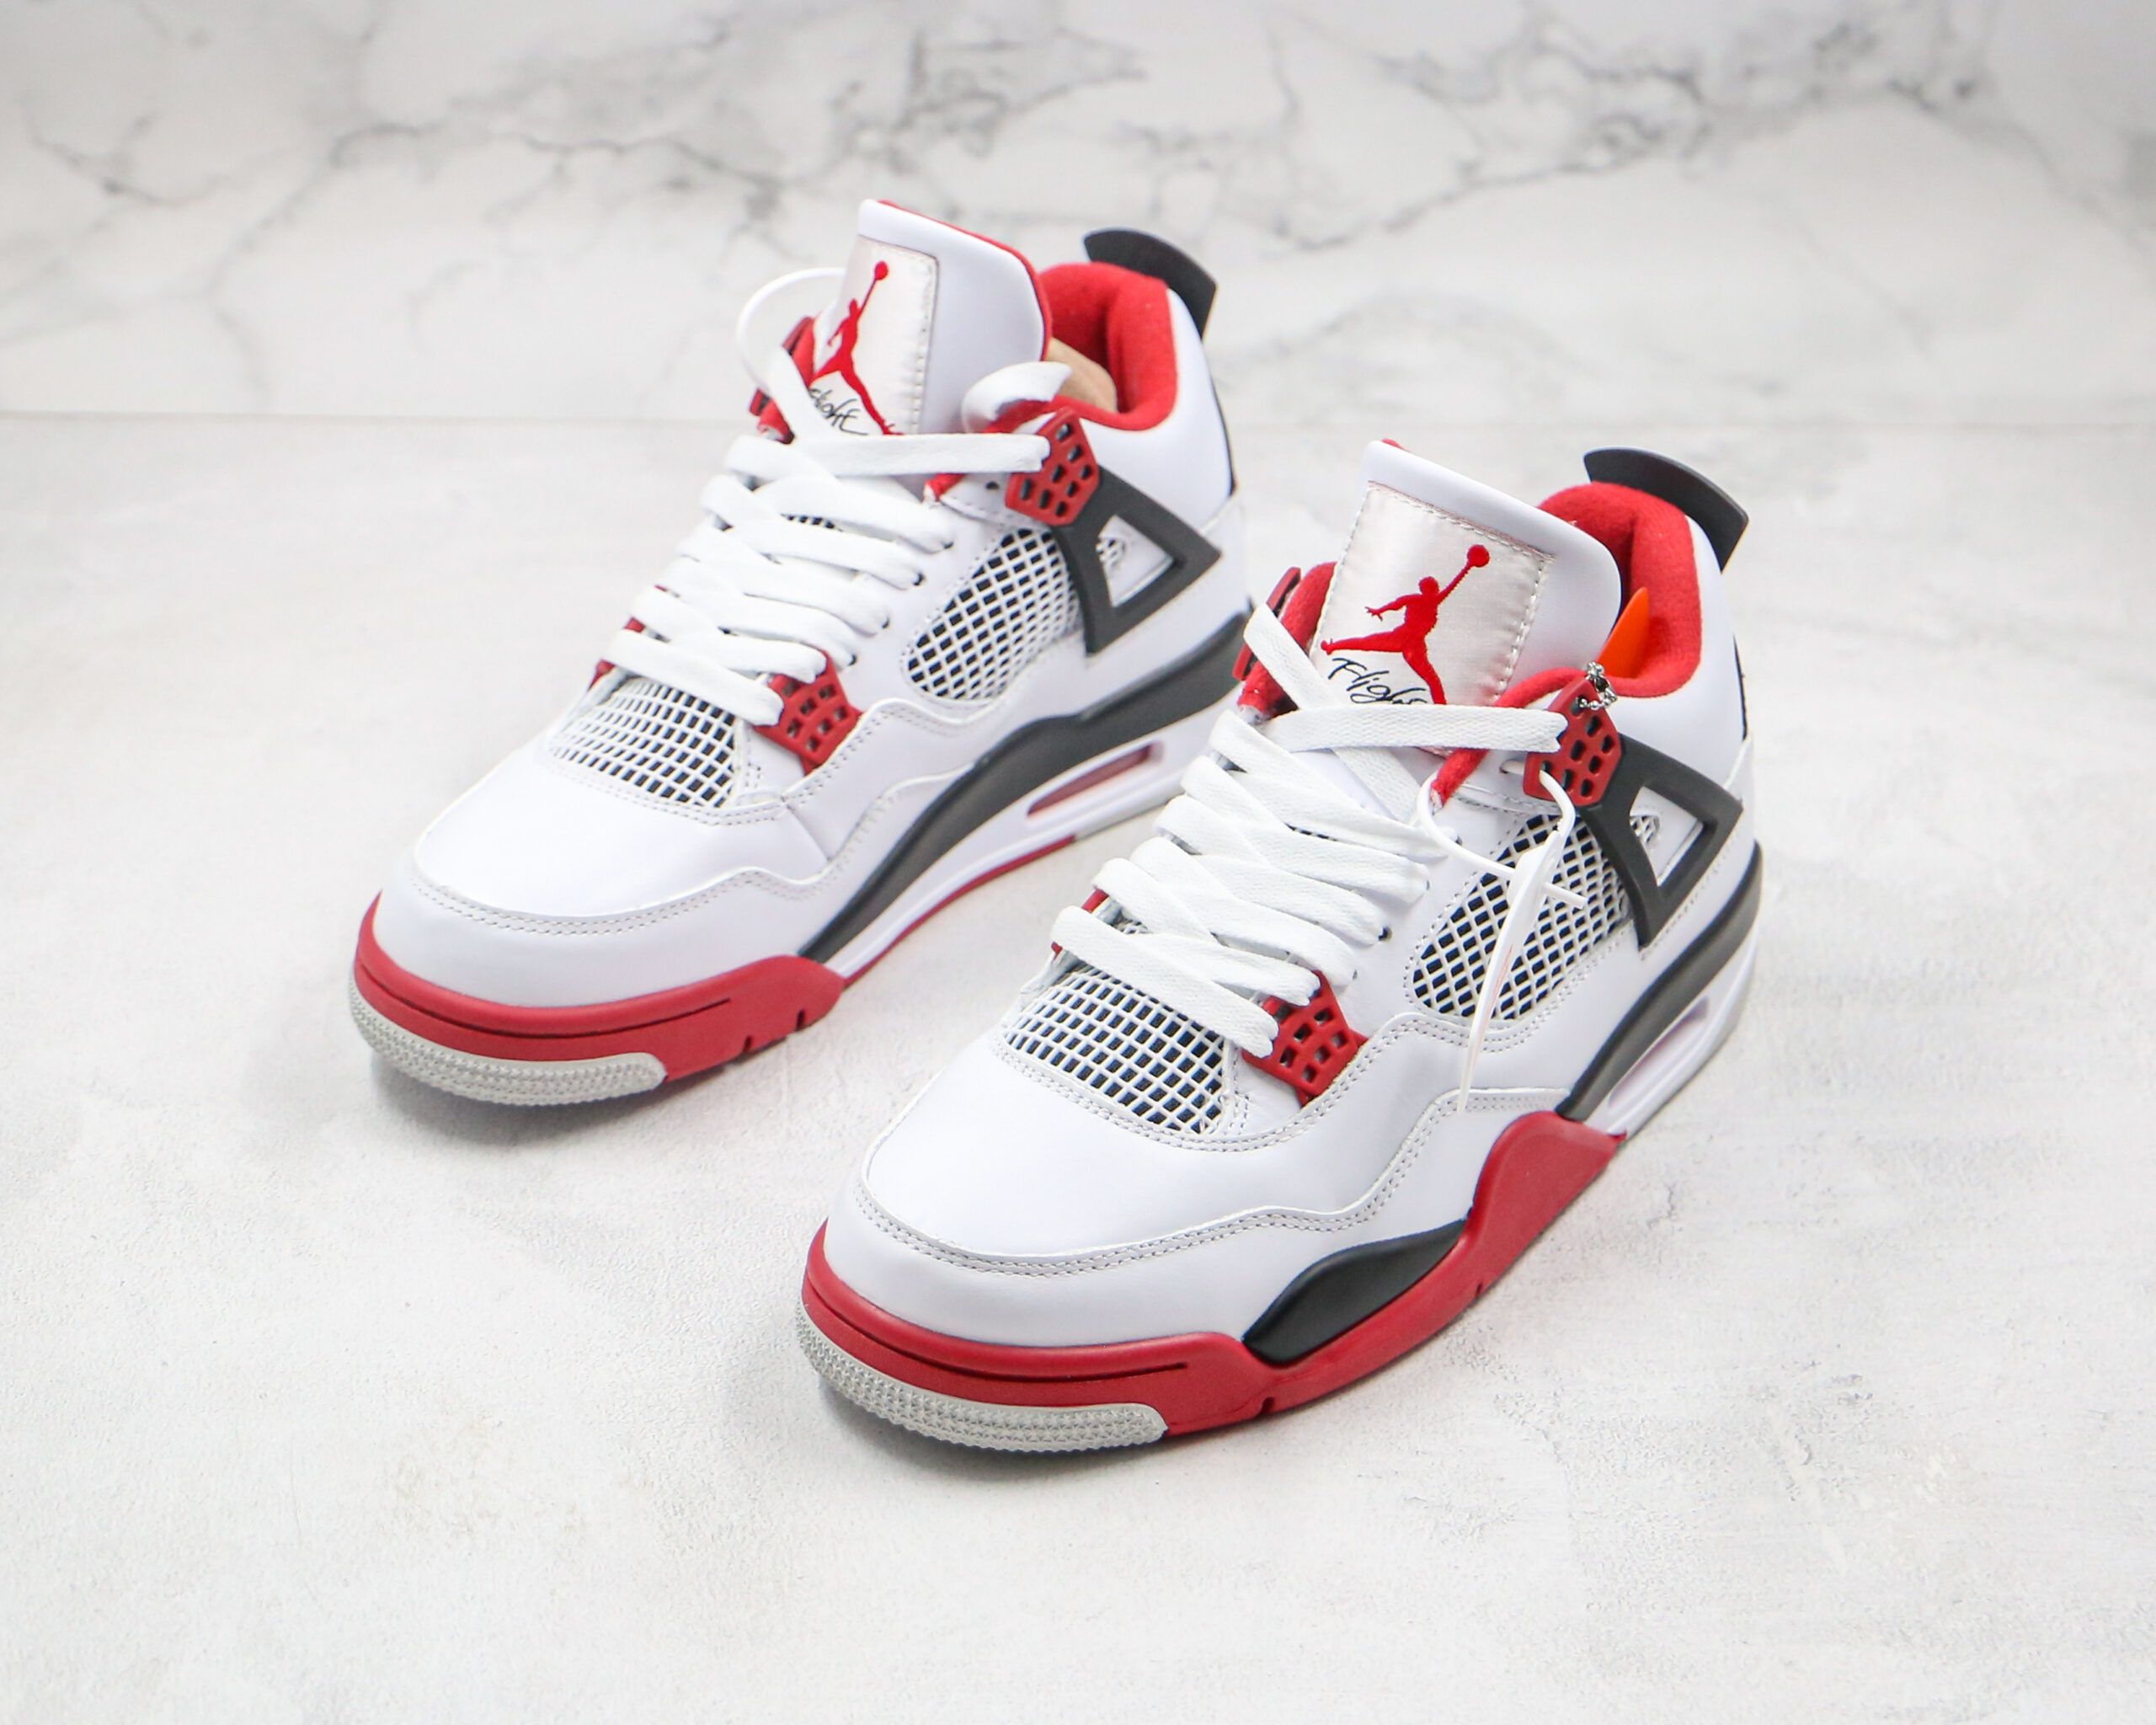 Air Jordan 4 Retro – Fire Red (2012)